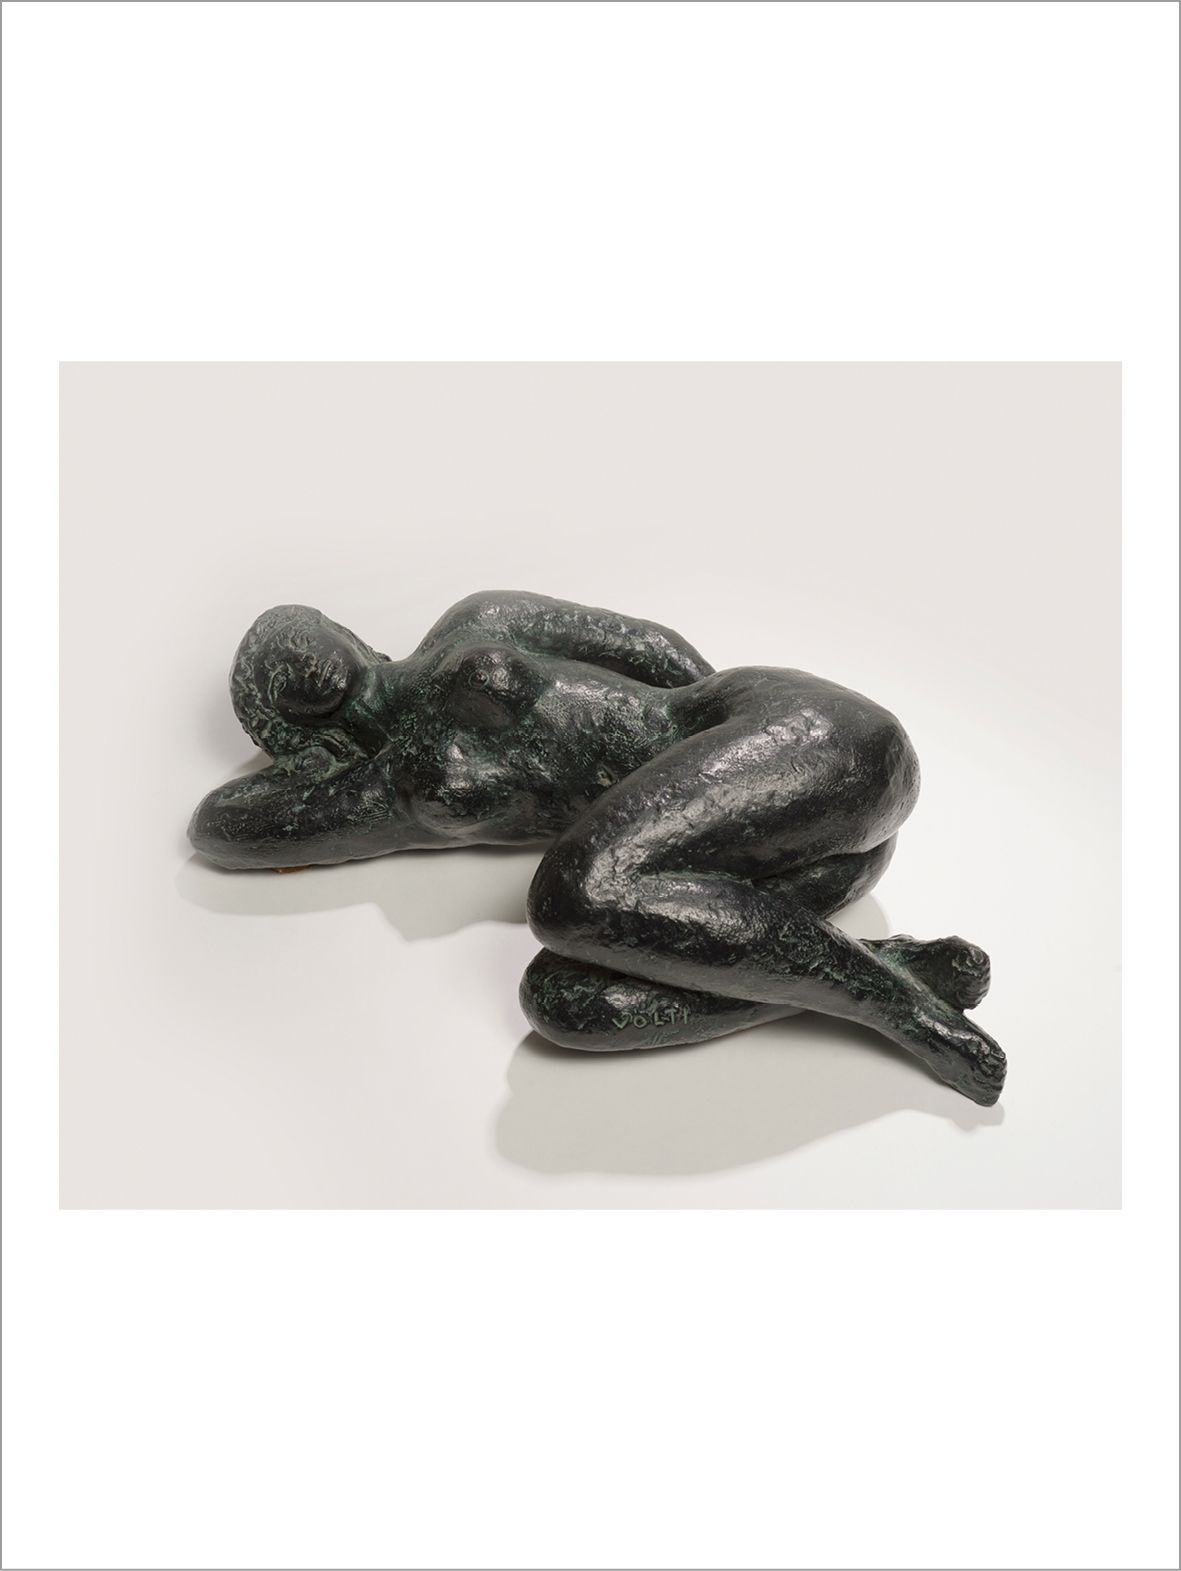 ANTONIUCCI VOLTI (1915-1989) 猫科动物
棕色铜质雕塑。
编号为4/6。
创始人卡佩利的印章。
棕色铜质雕塑。
编号为4/6。
创始人&hellip;